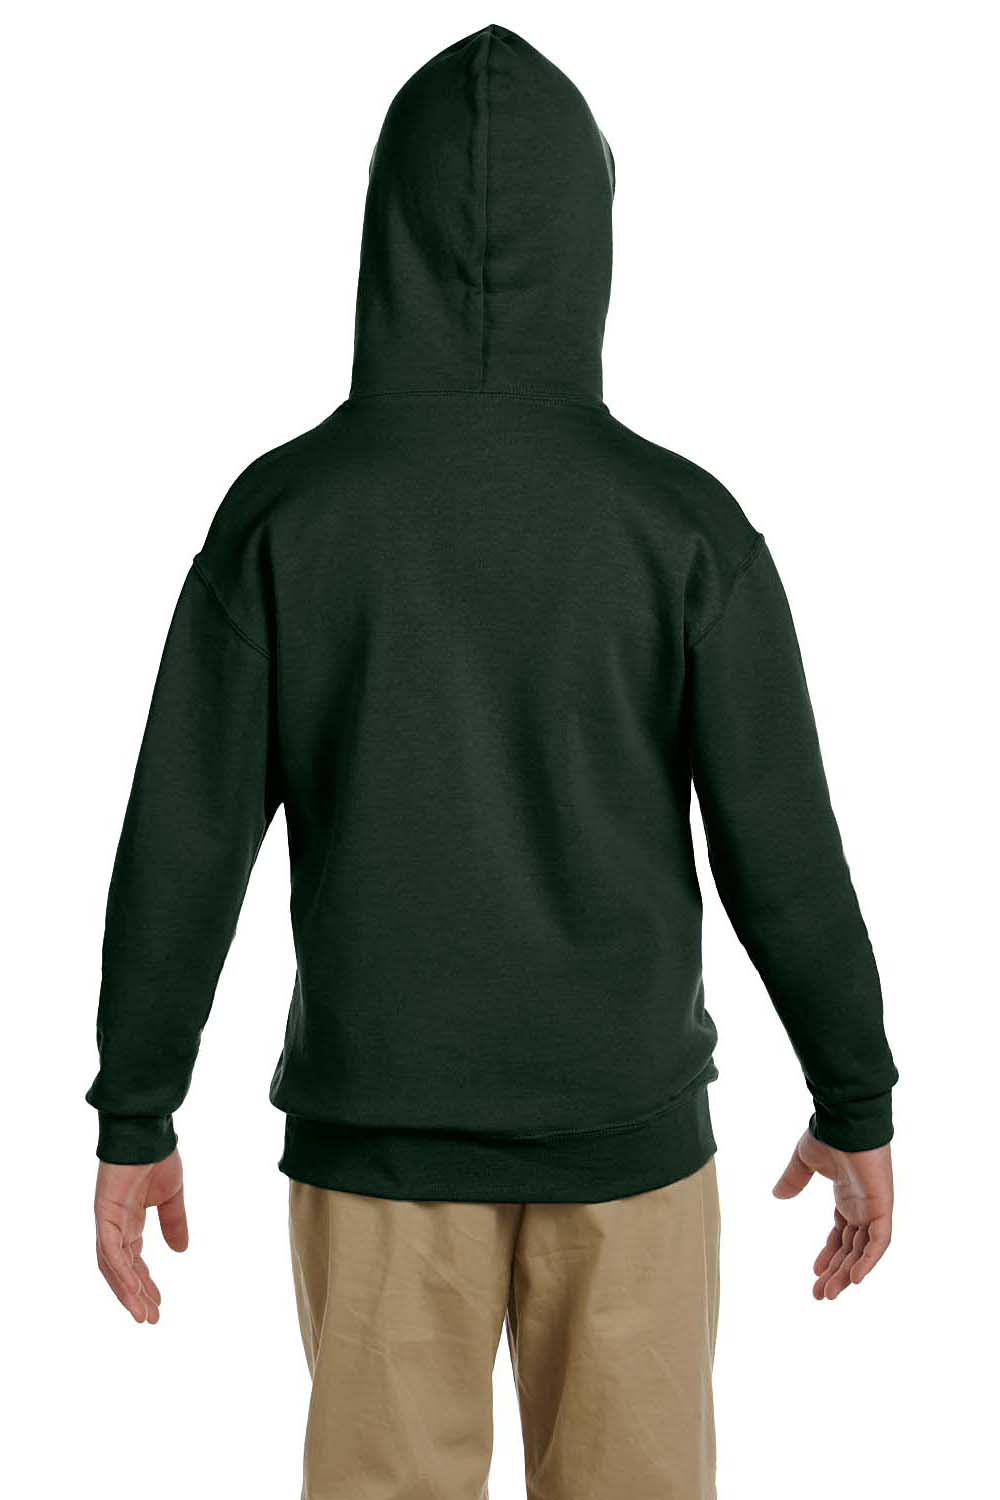 Jerzees 996Y Youth NuBlend Fleece Hooded Sweatshirt Hoodie Forest Green Back